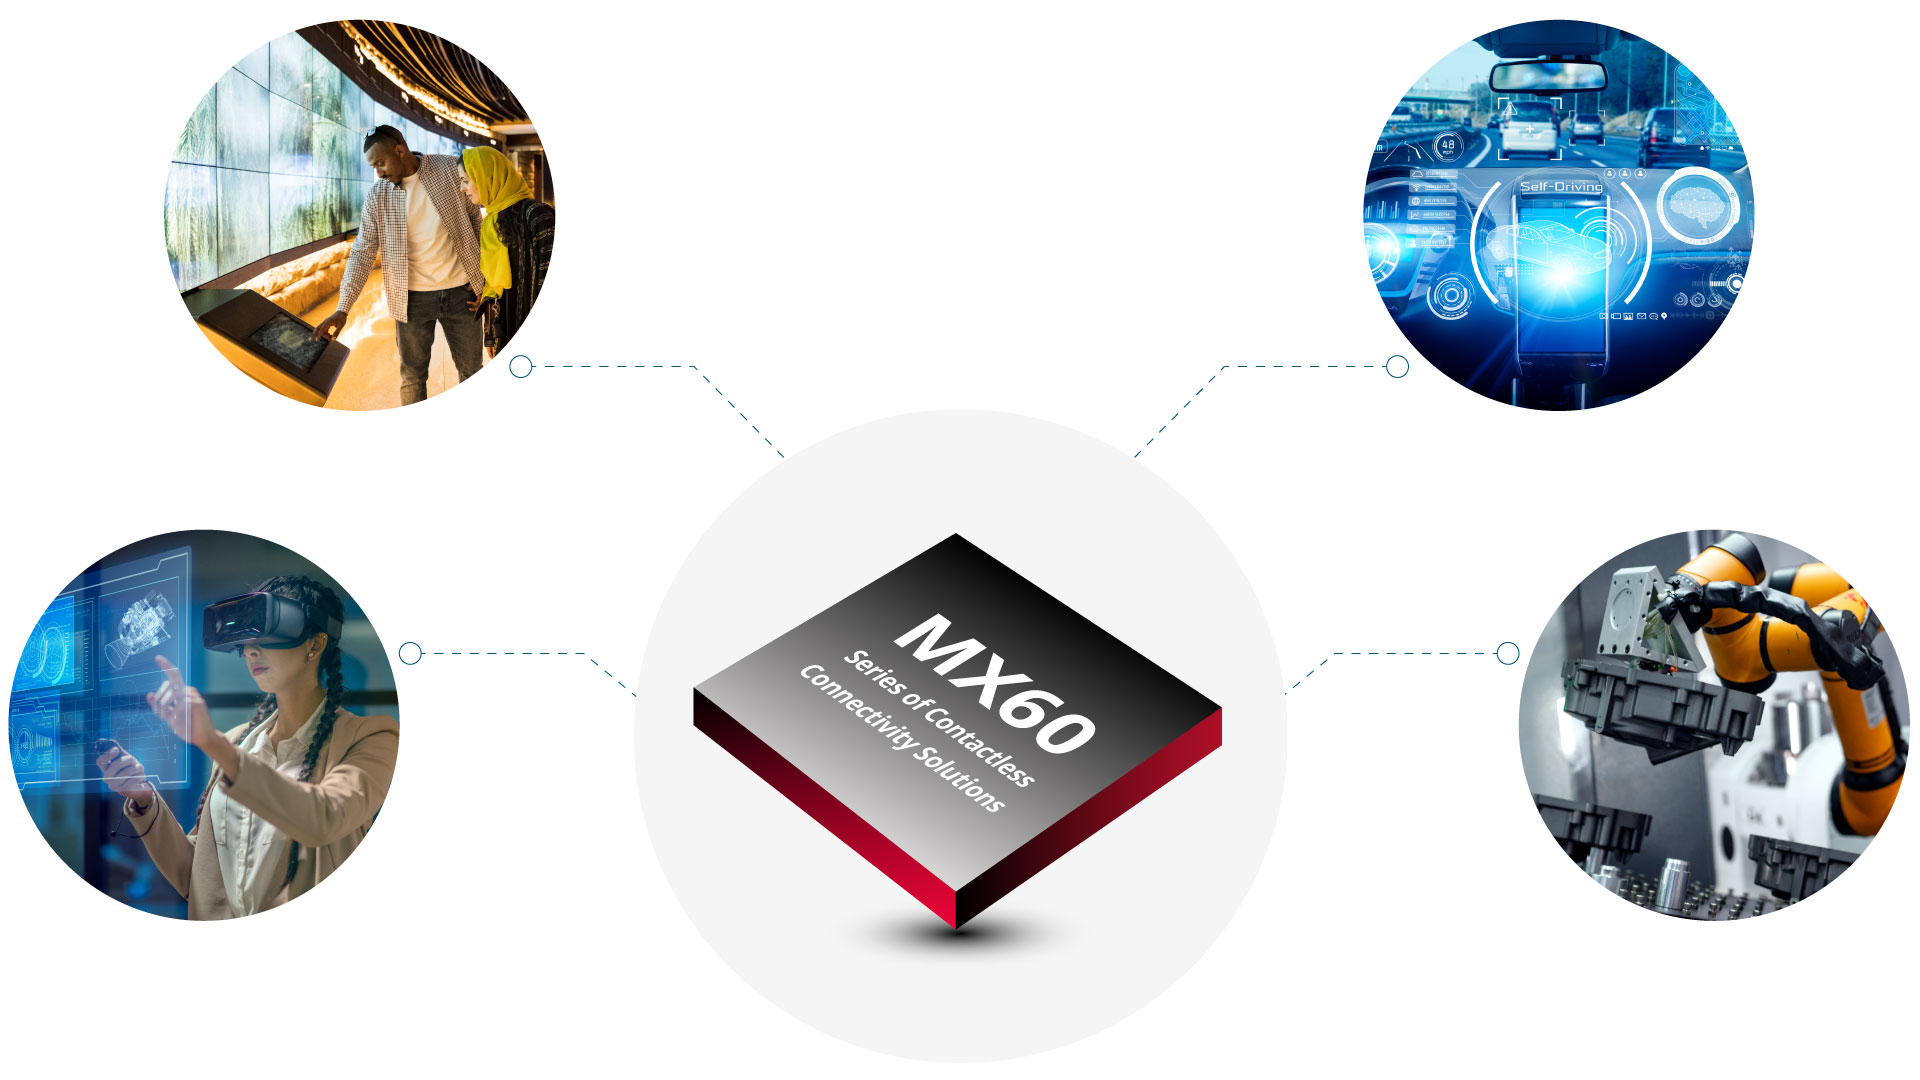 Molex莫仕推出MX60系列非接触式连接解决方案,旨在简化设备配对过程、优化设计工程并提高产品的整体可靠性